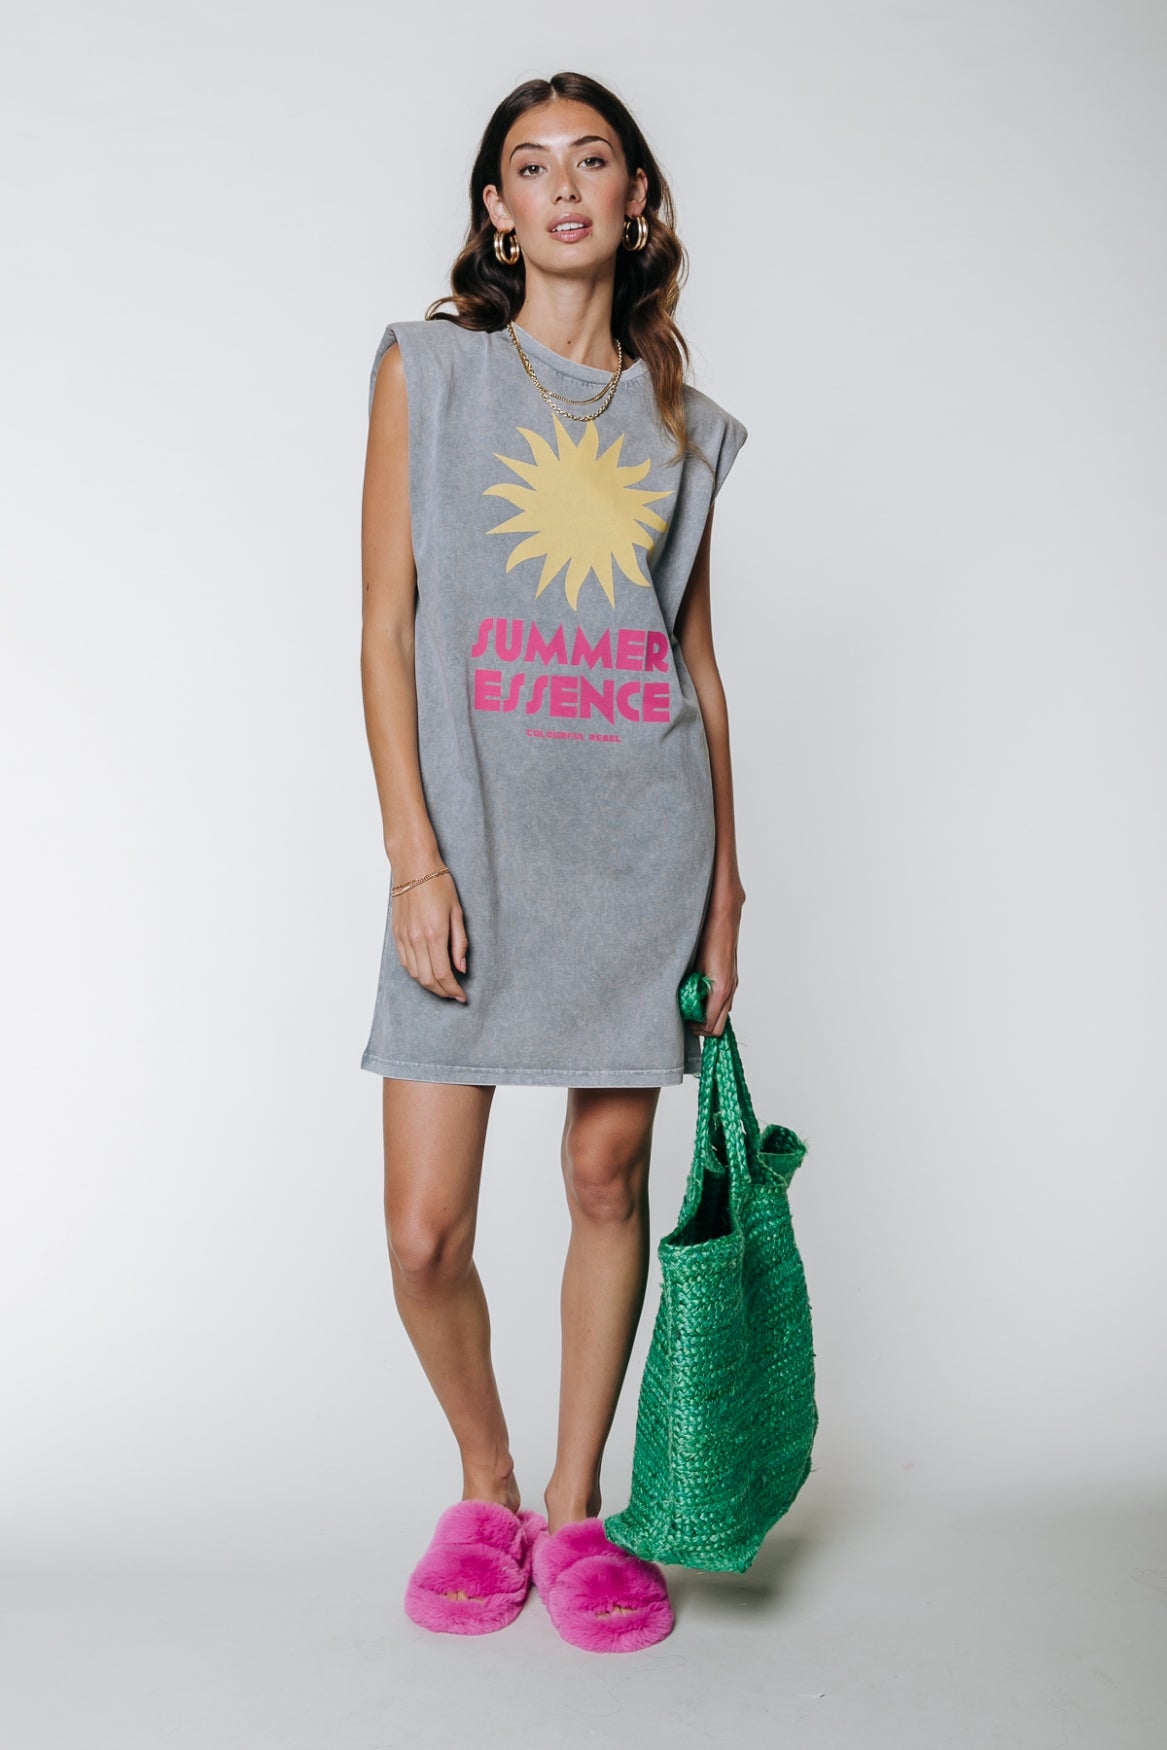 CR Summer Essence padded tee dress - grey